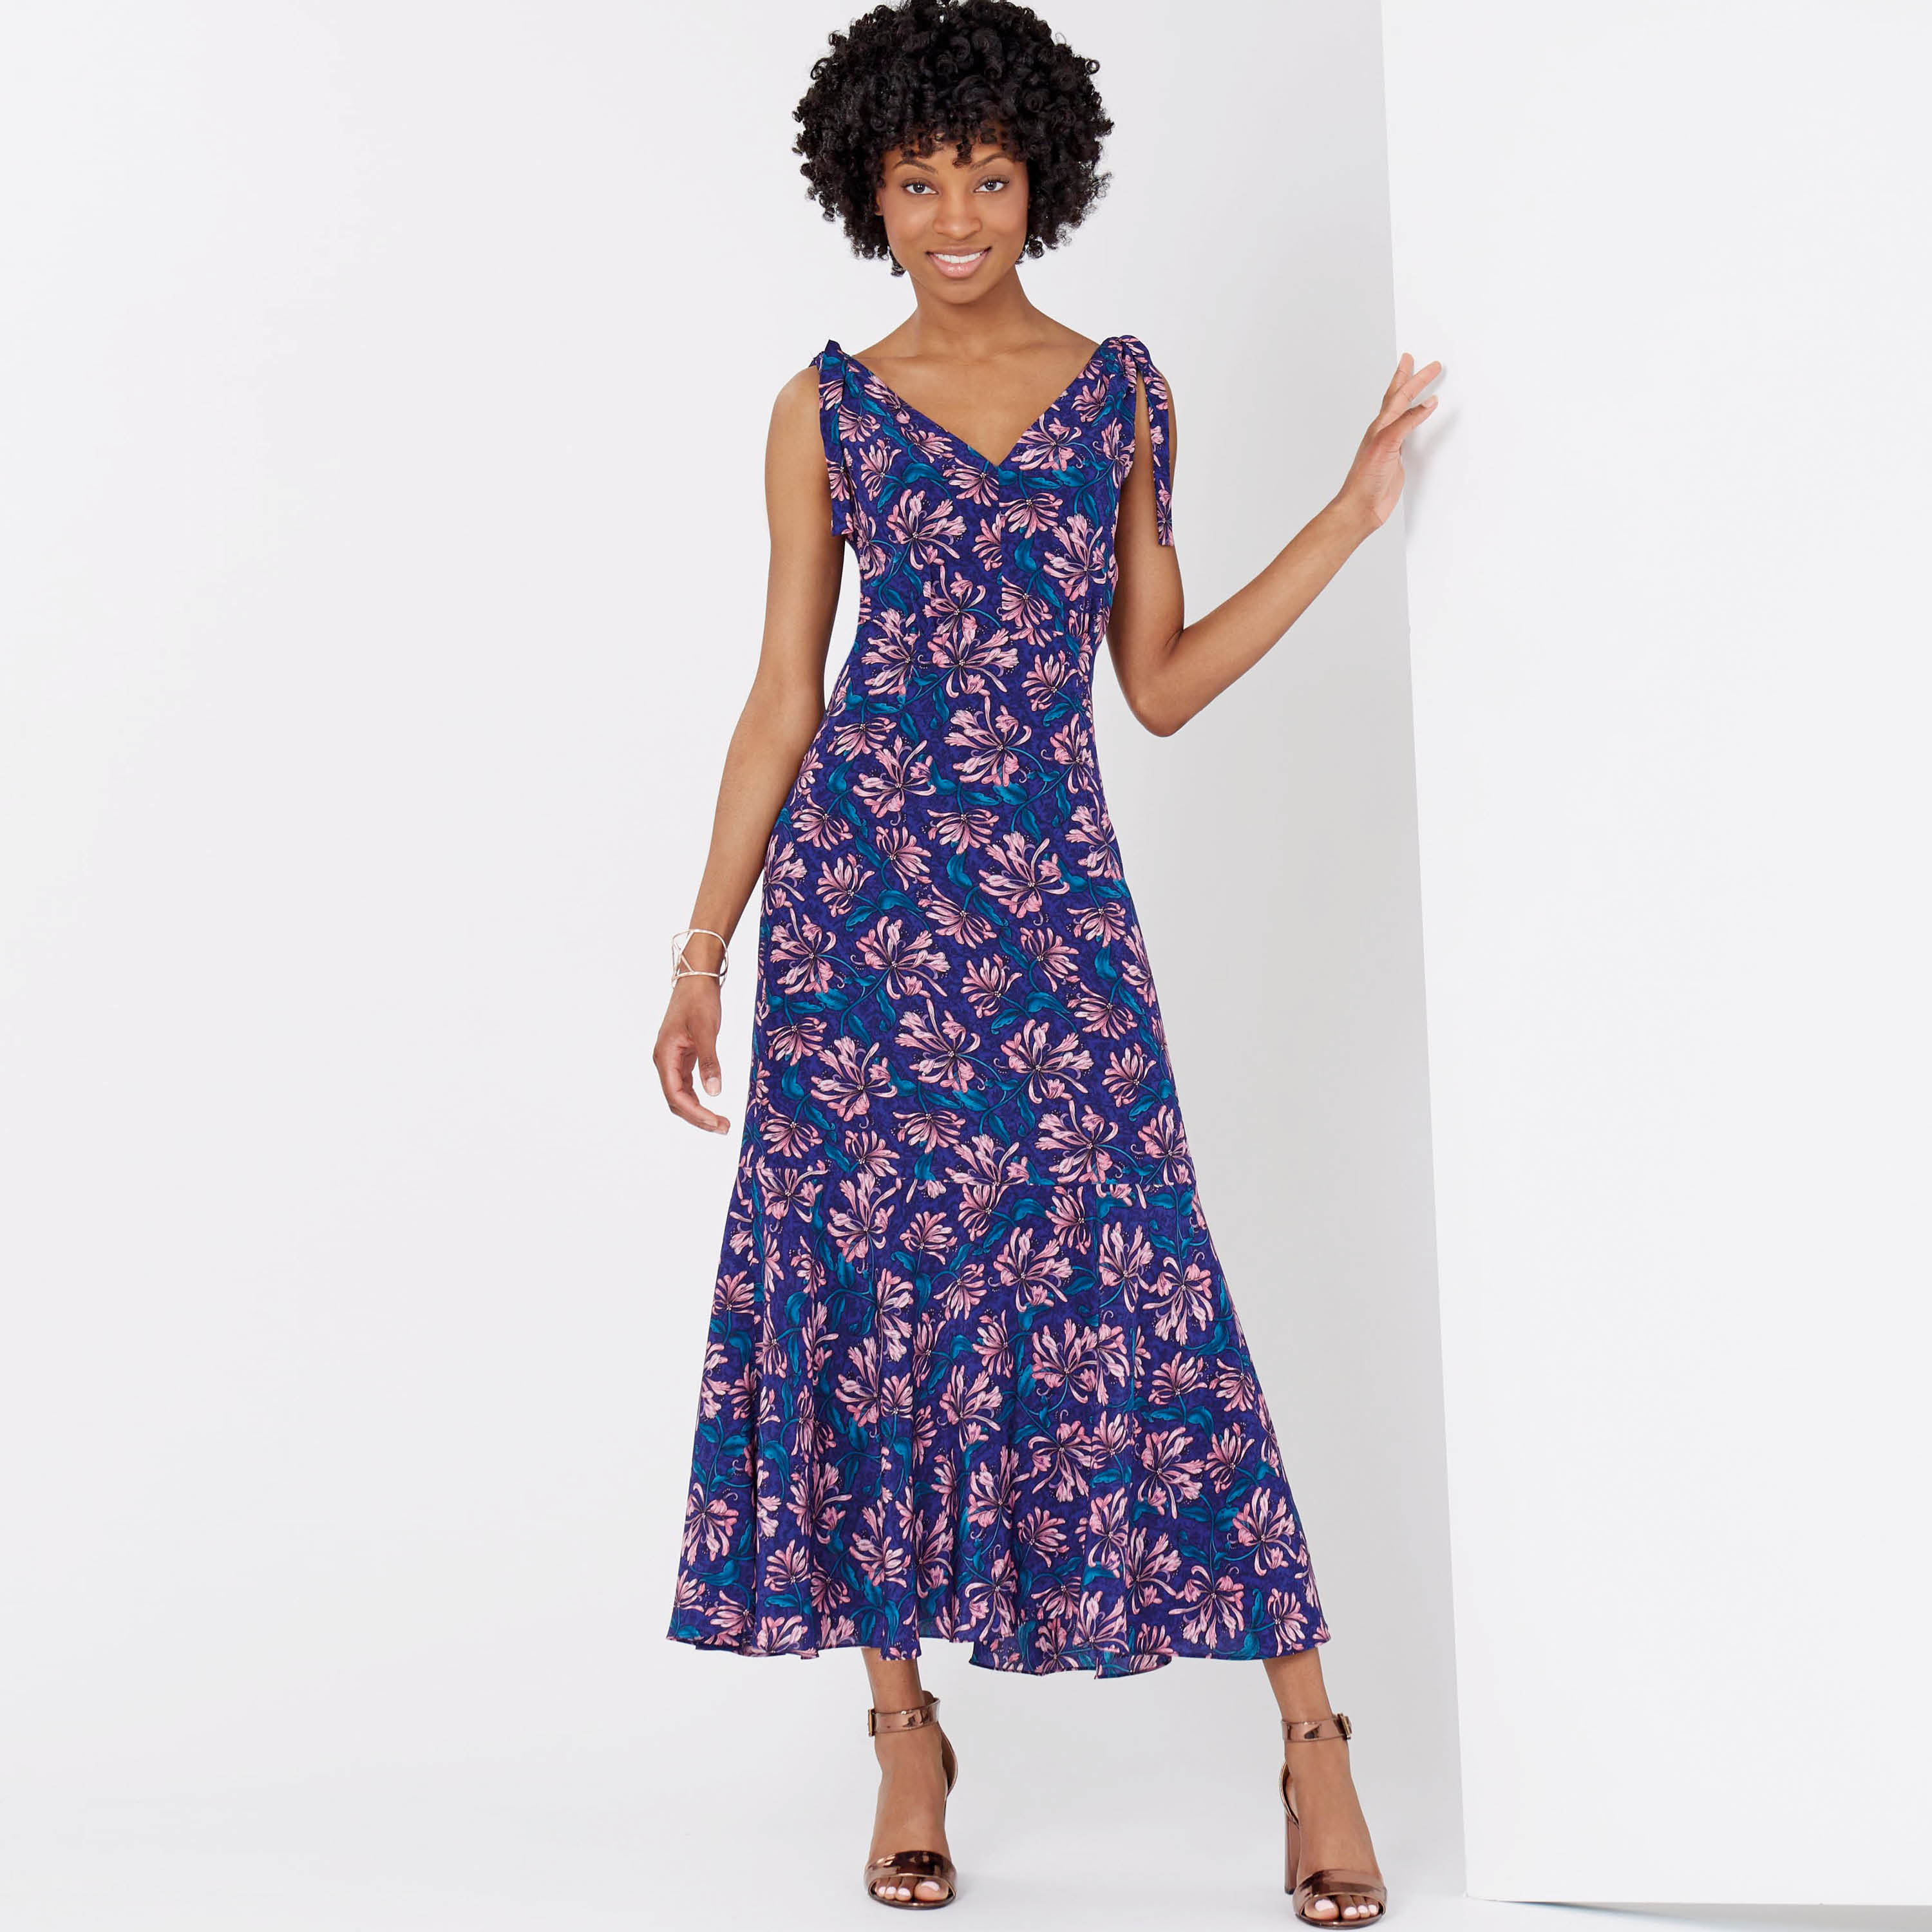 New Look Women's 6682 - Misses' Dress – Ray Stitch